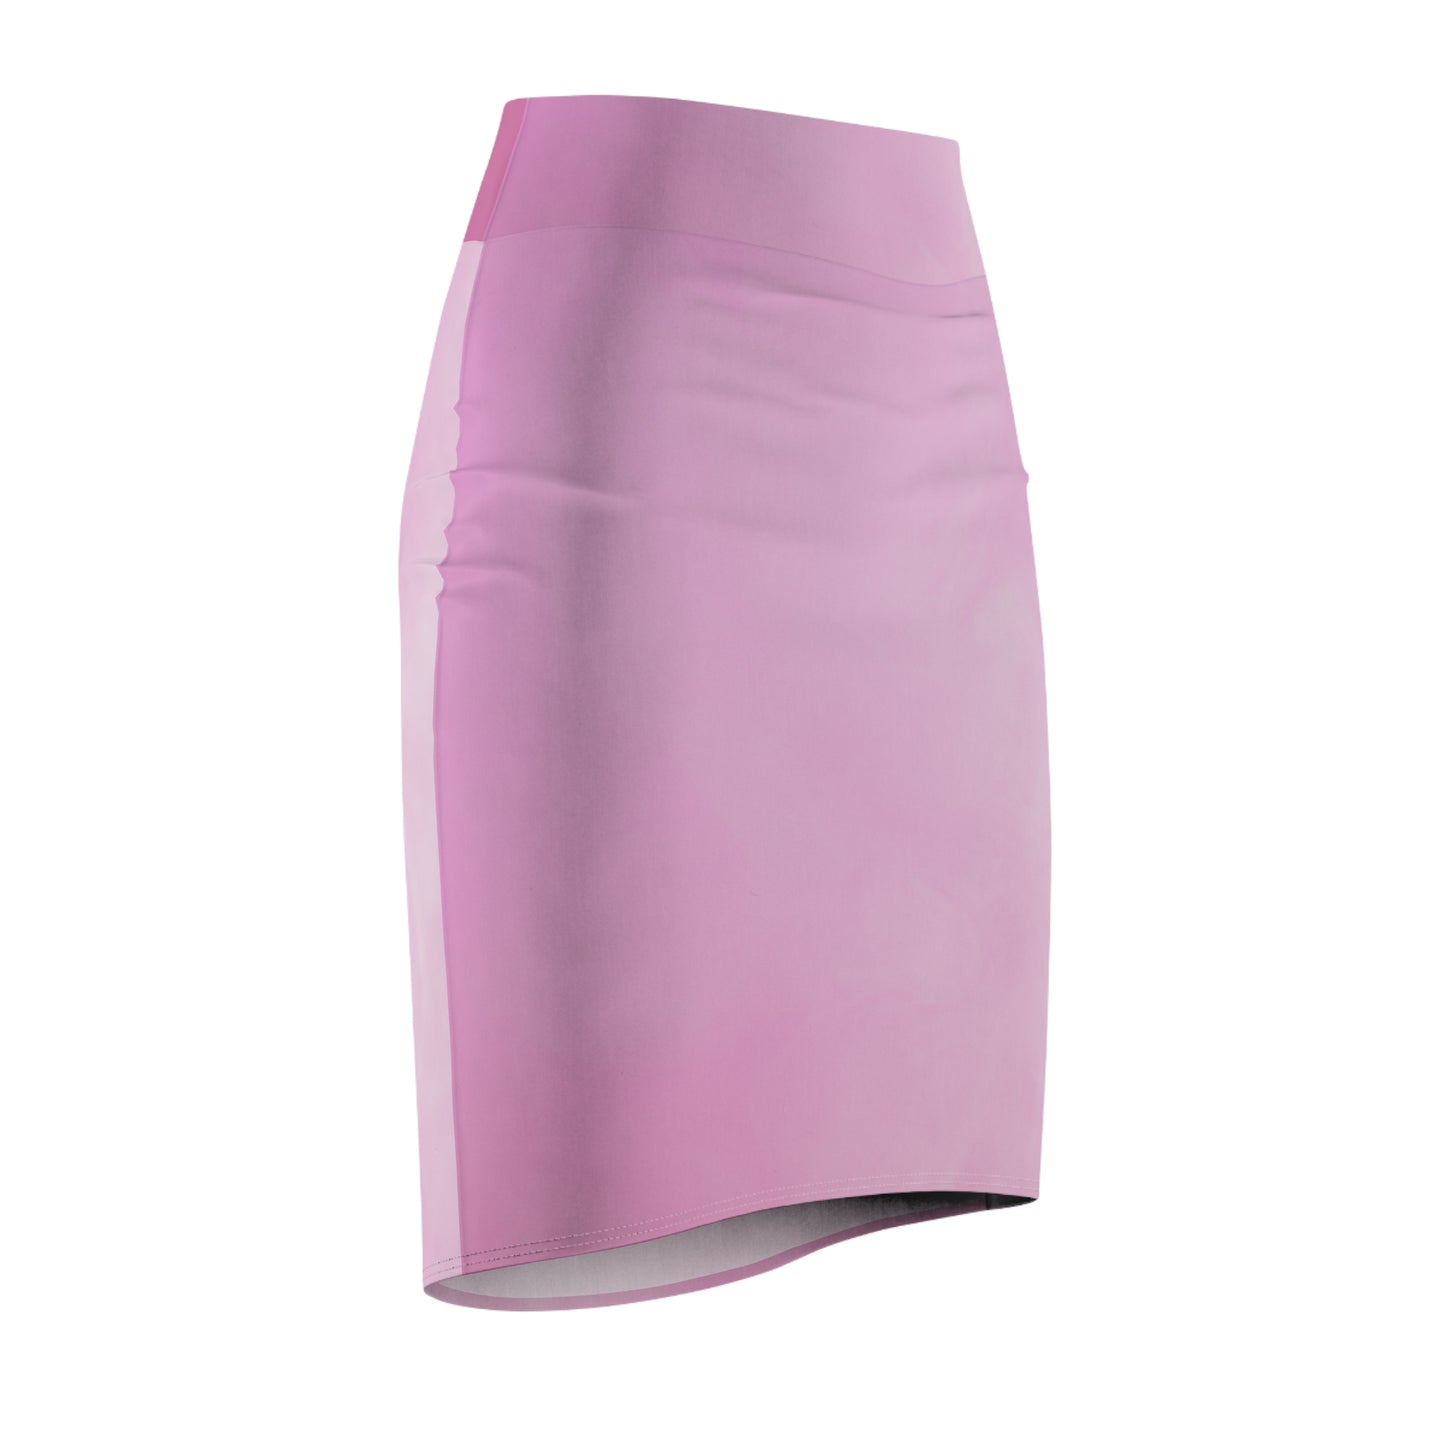 Cloud Pink Pencil Skirt